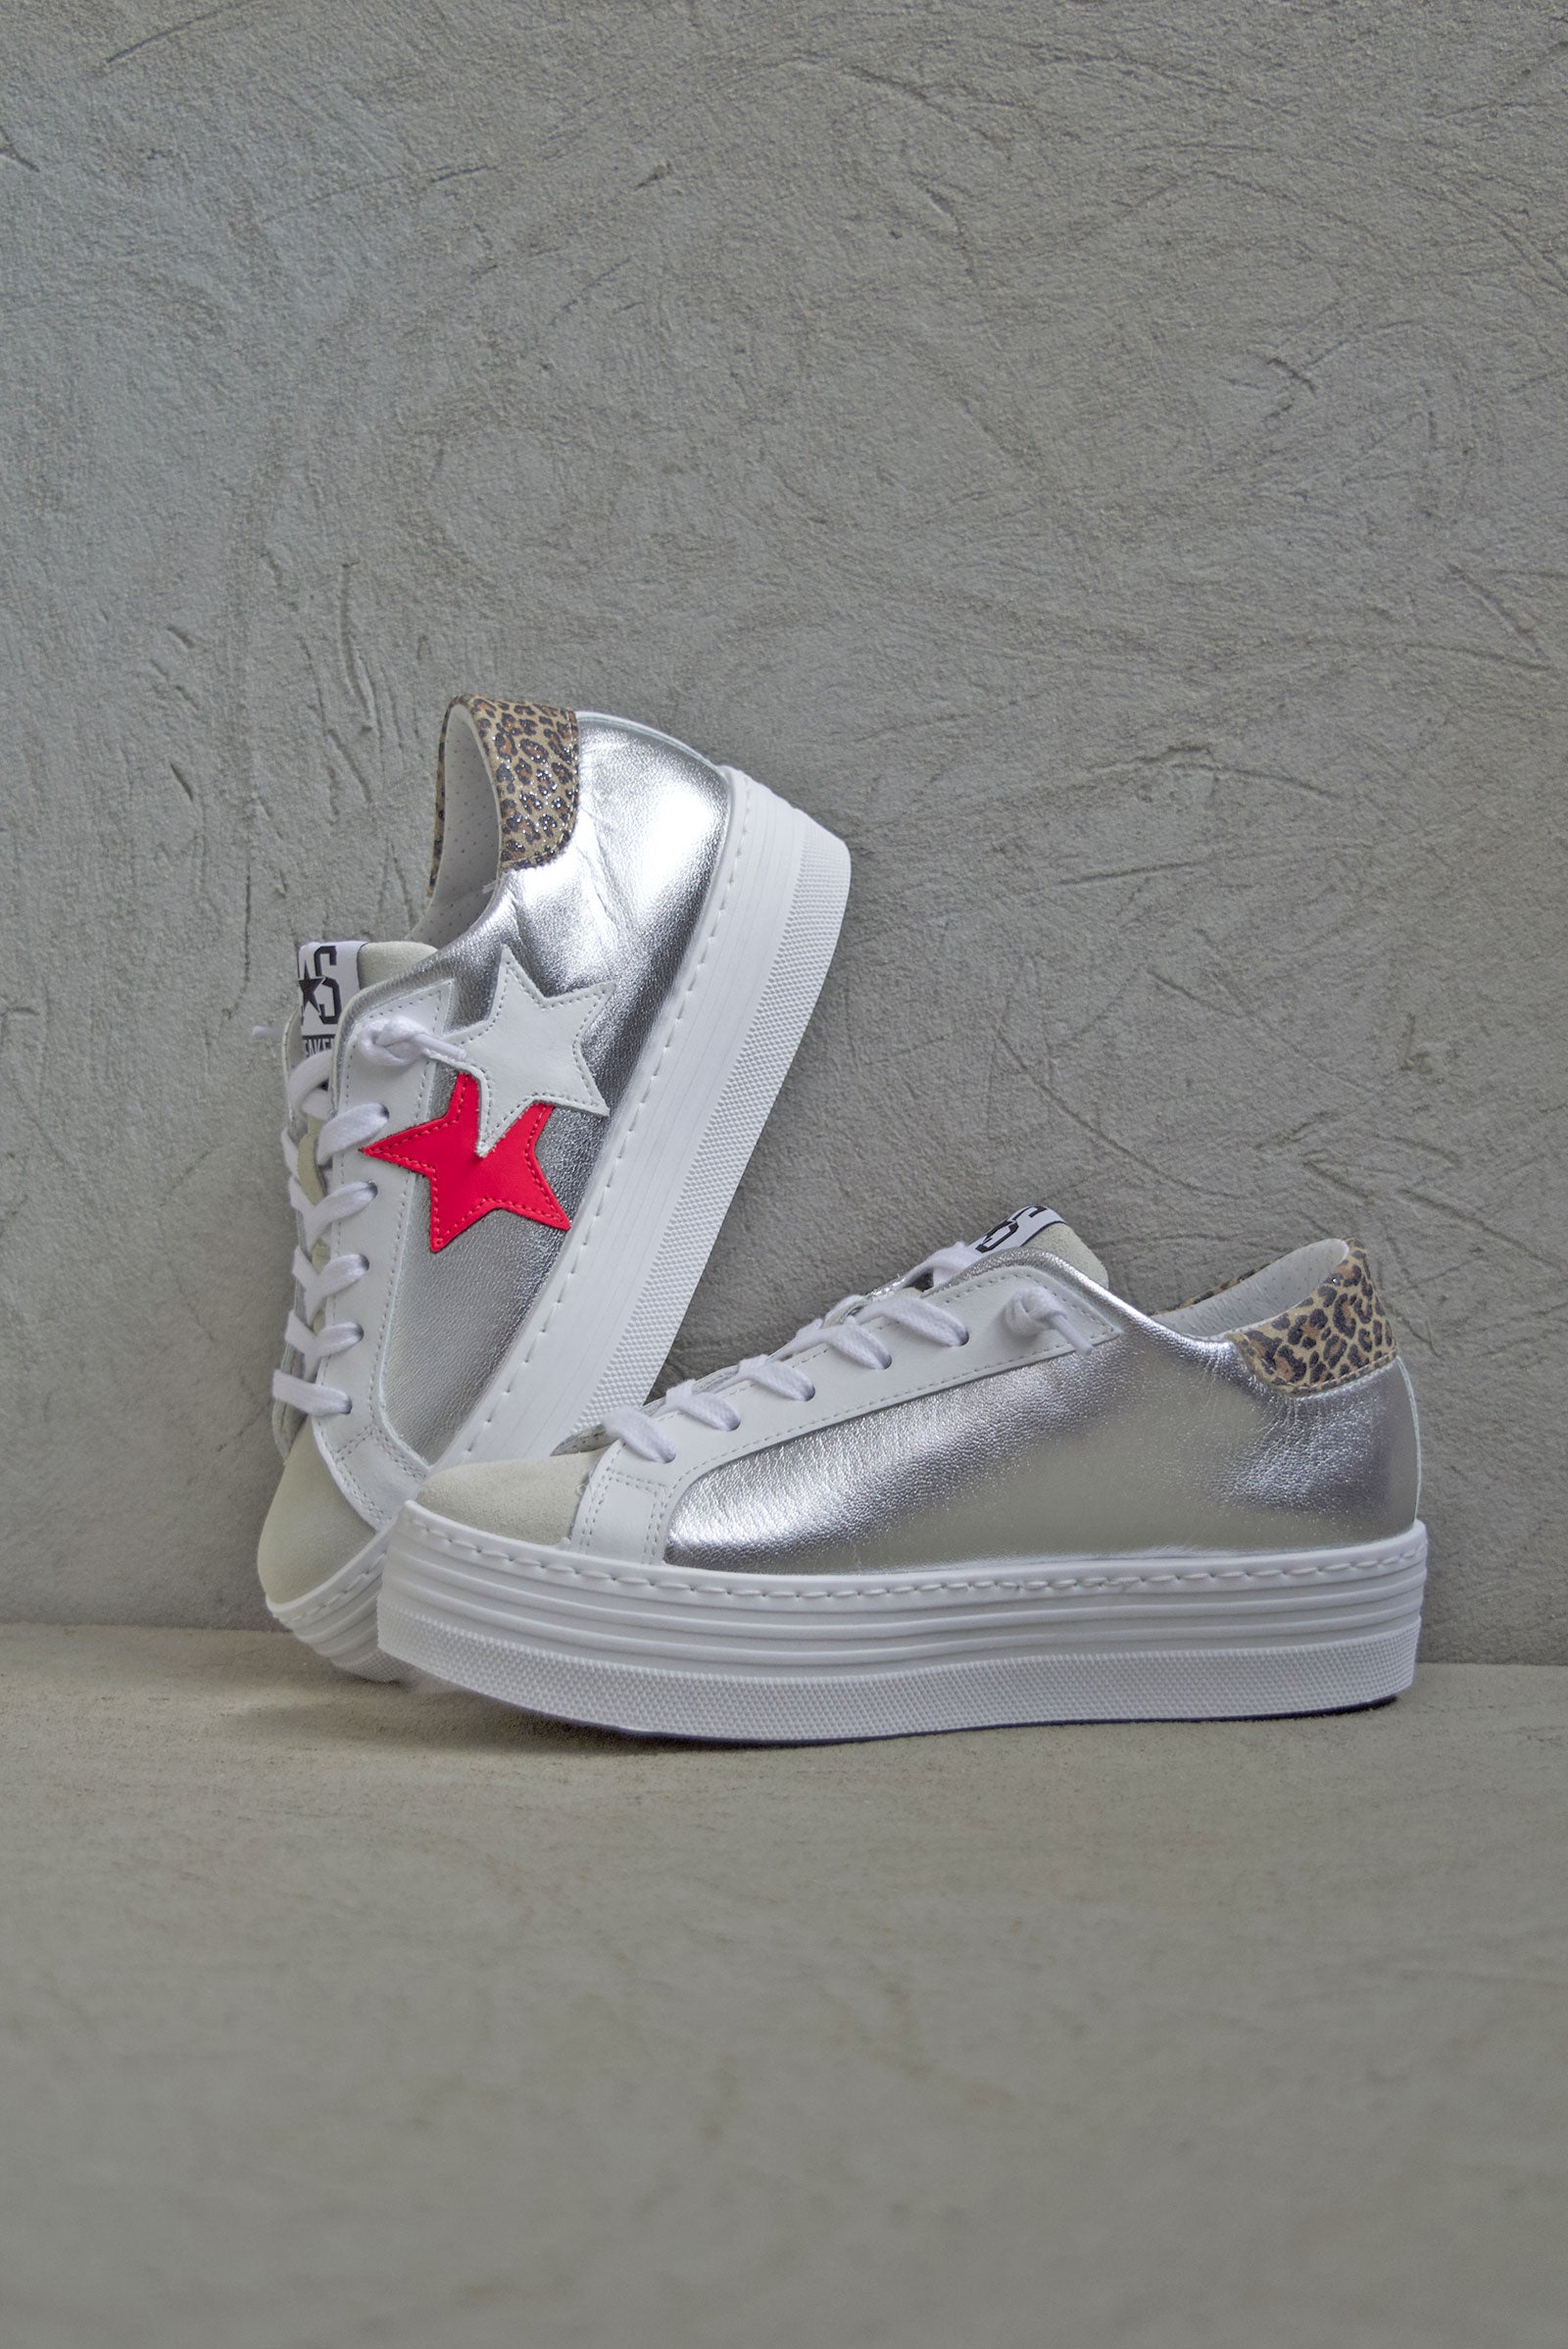 Hs low leopard fluo women's sneaker shoe 2sd3441 white bianco-argento-fuxia donna 